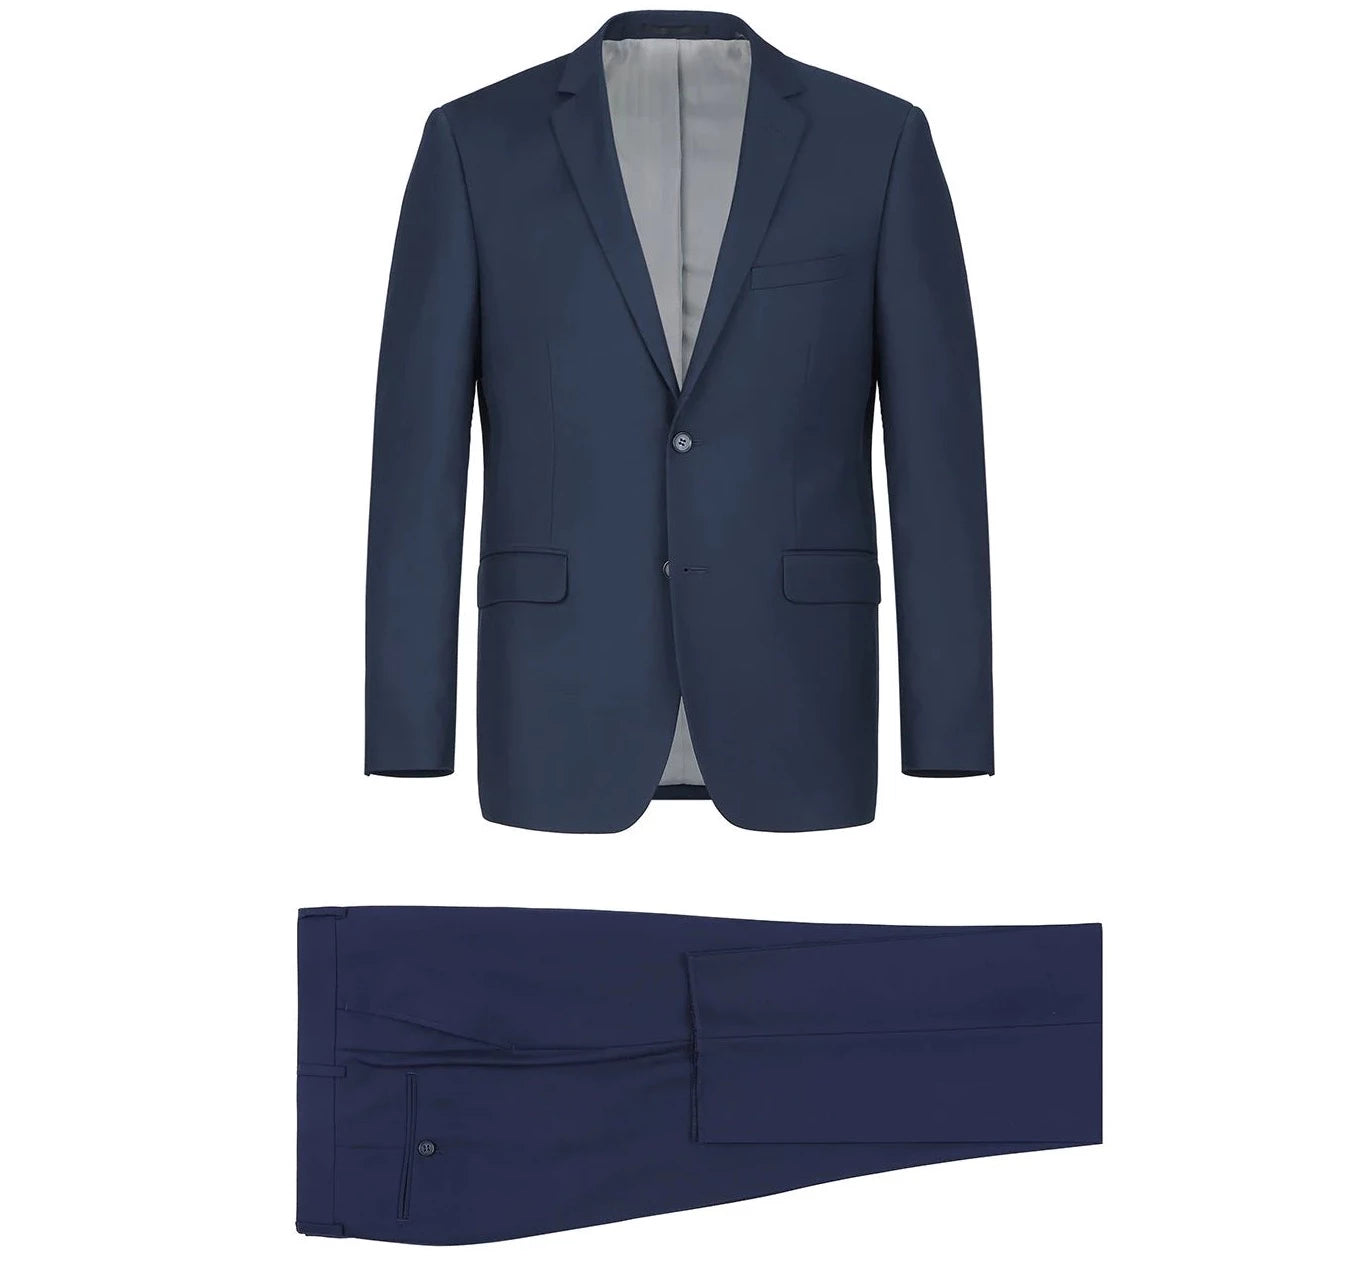 Men's Navy Blue Wool Blend 2-Piece Single Breasted Notch Lapel Suit.